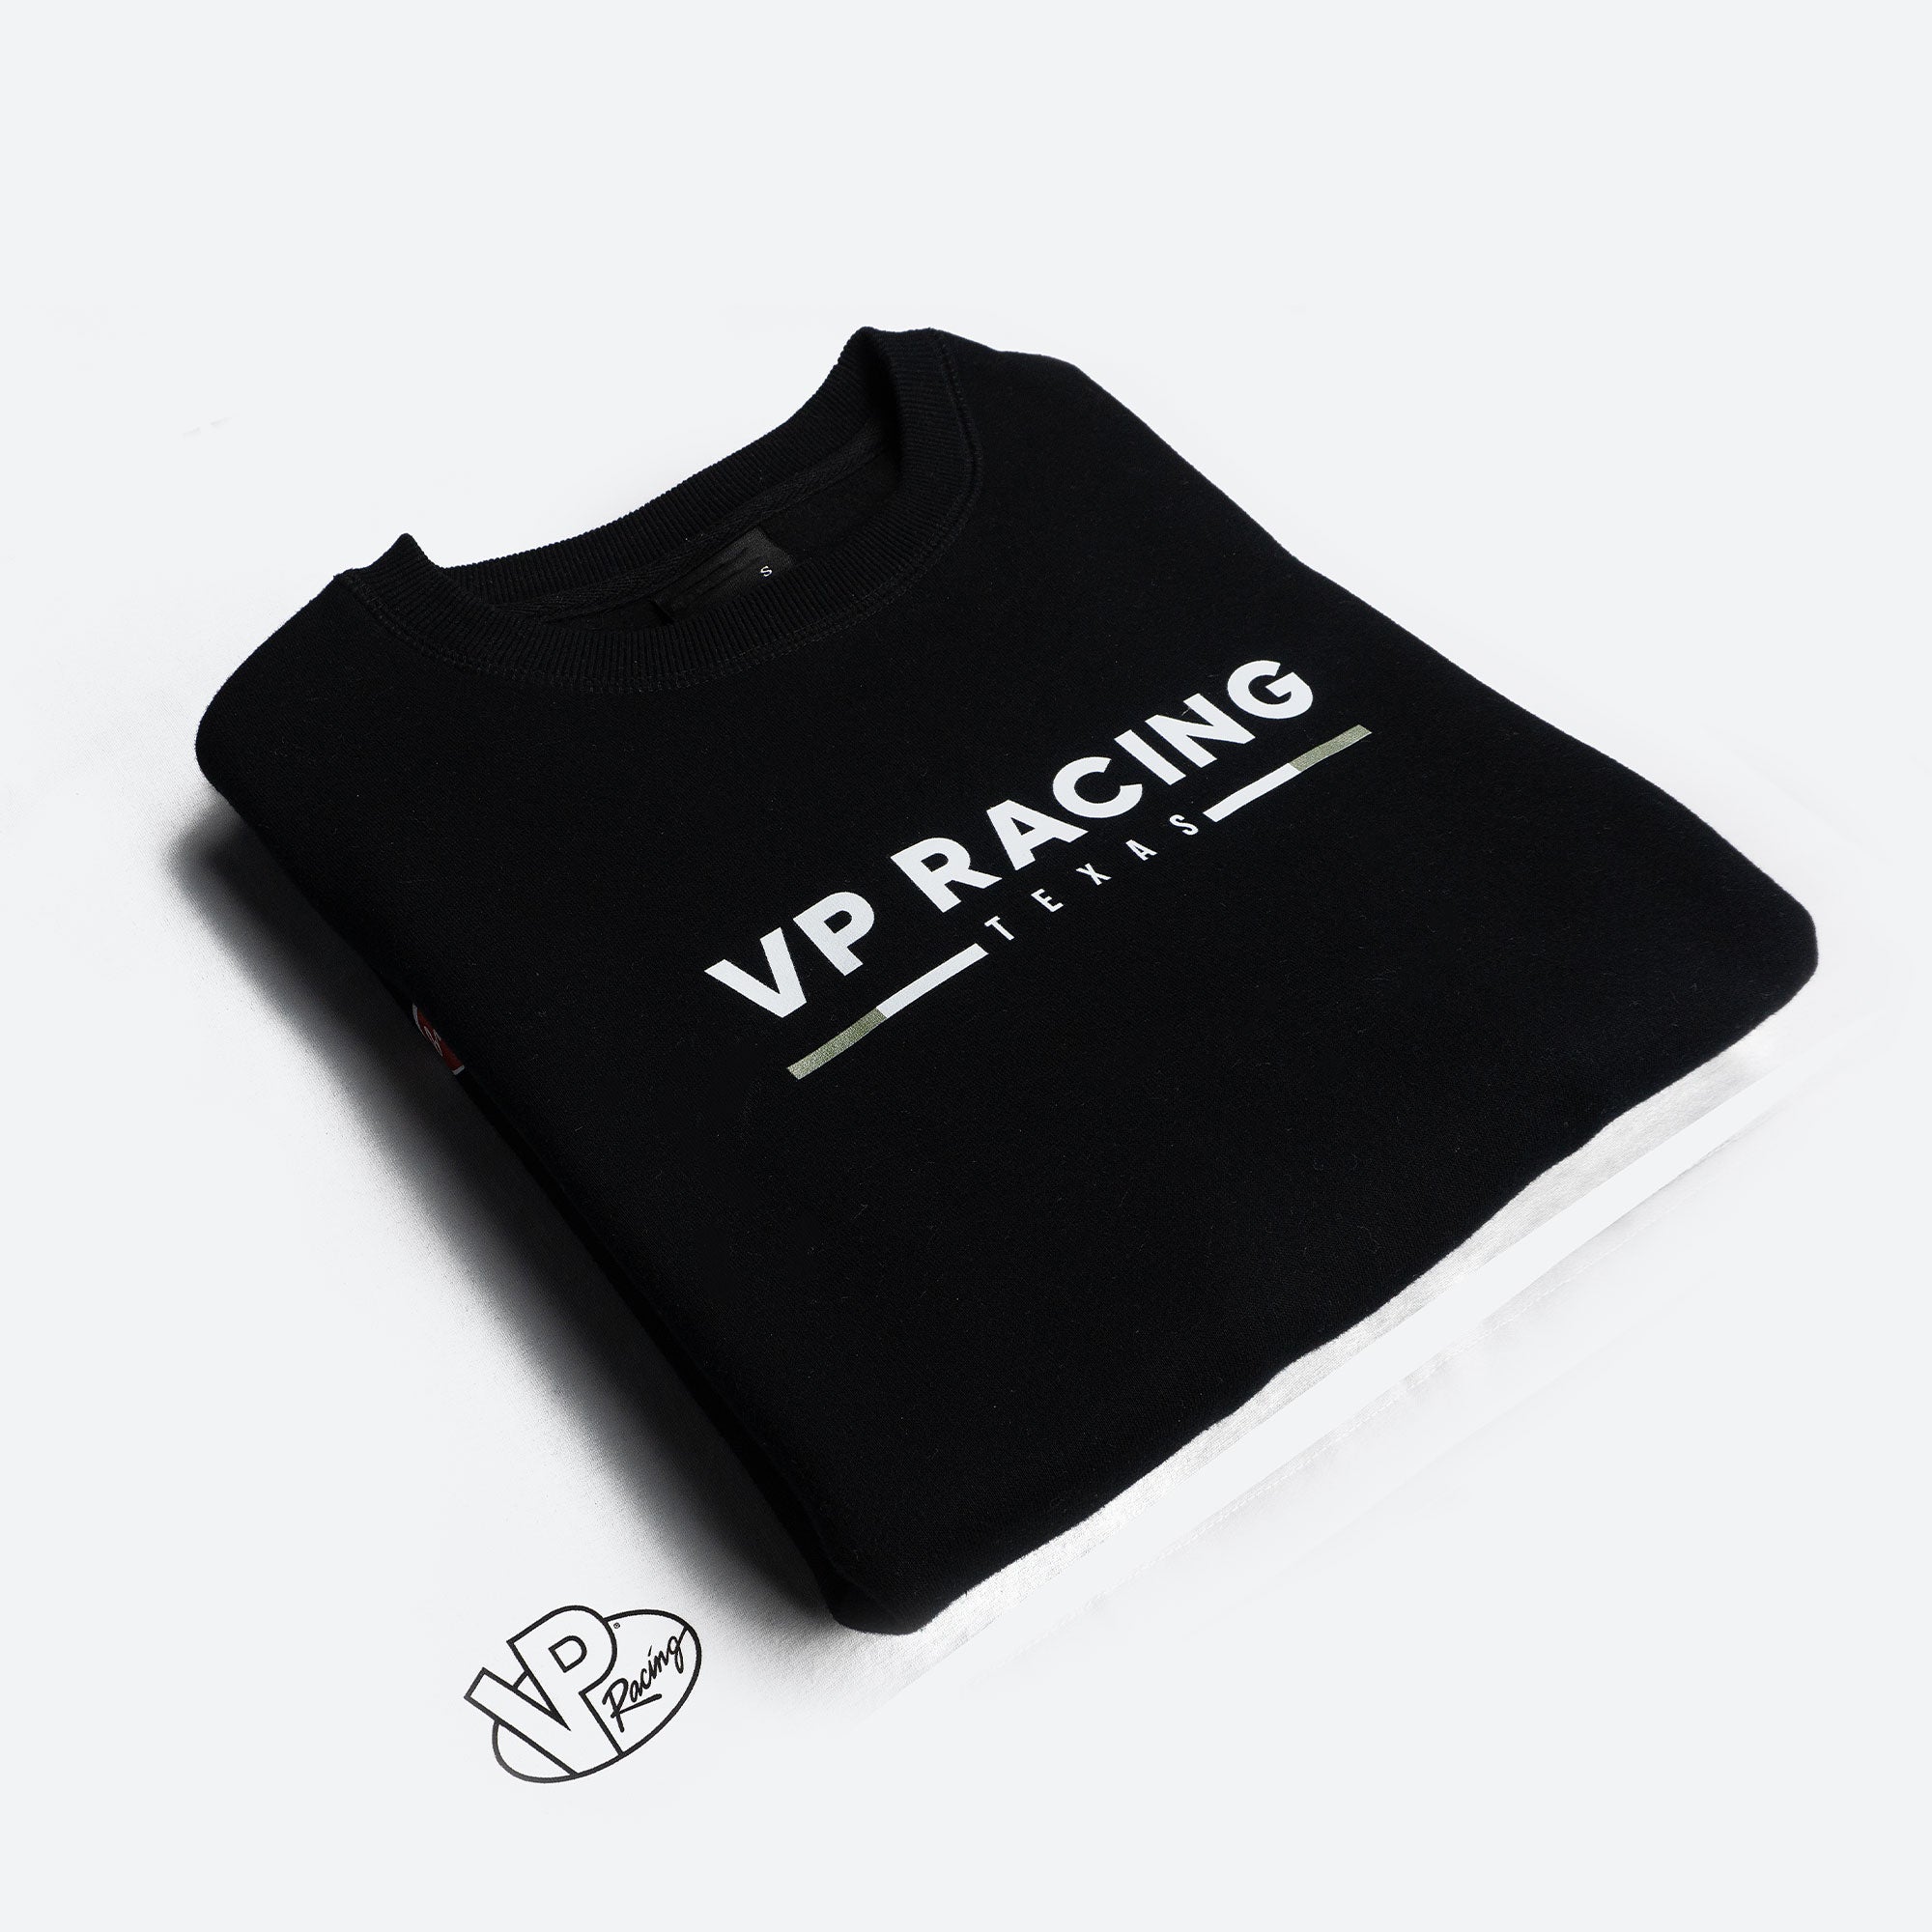 VP Racing - Texas Black Sweatshirt